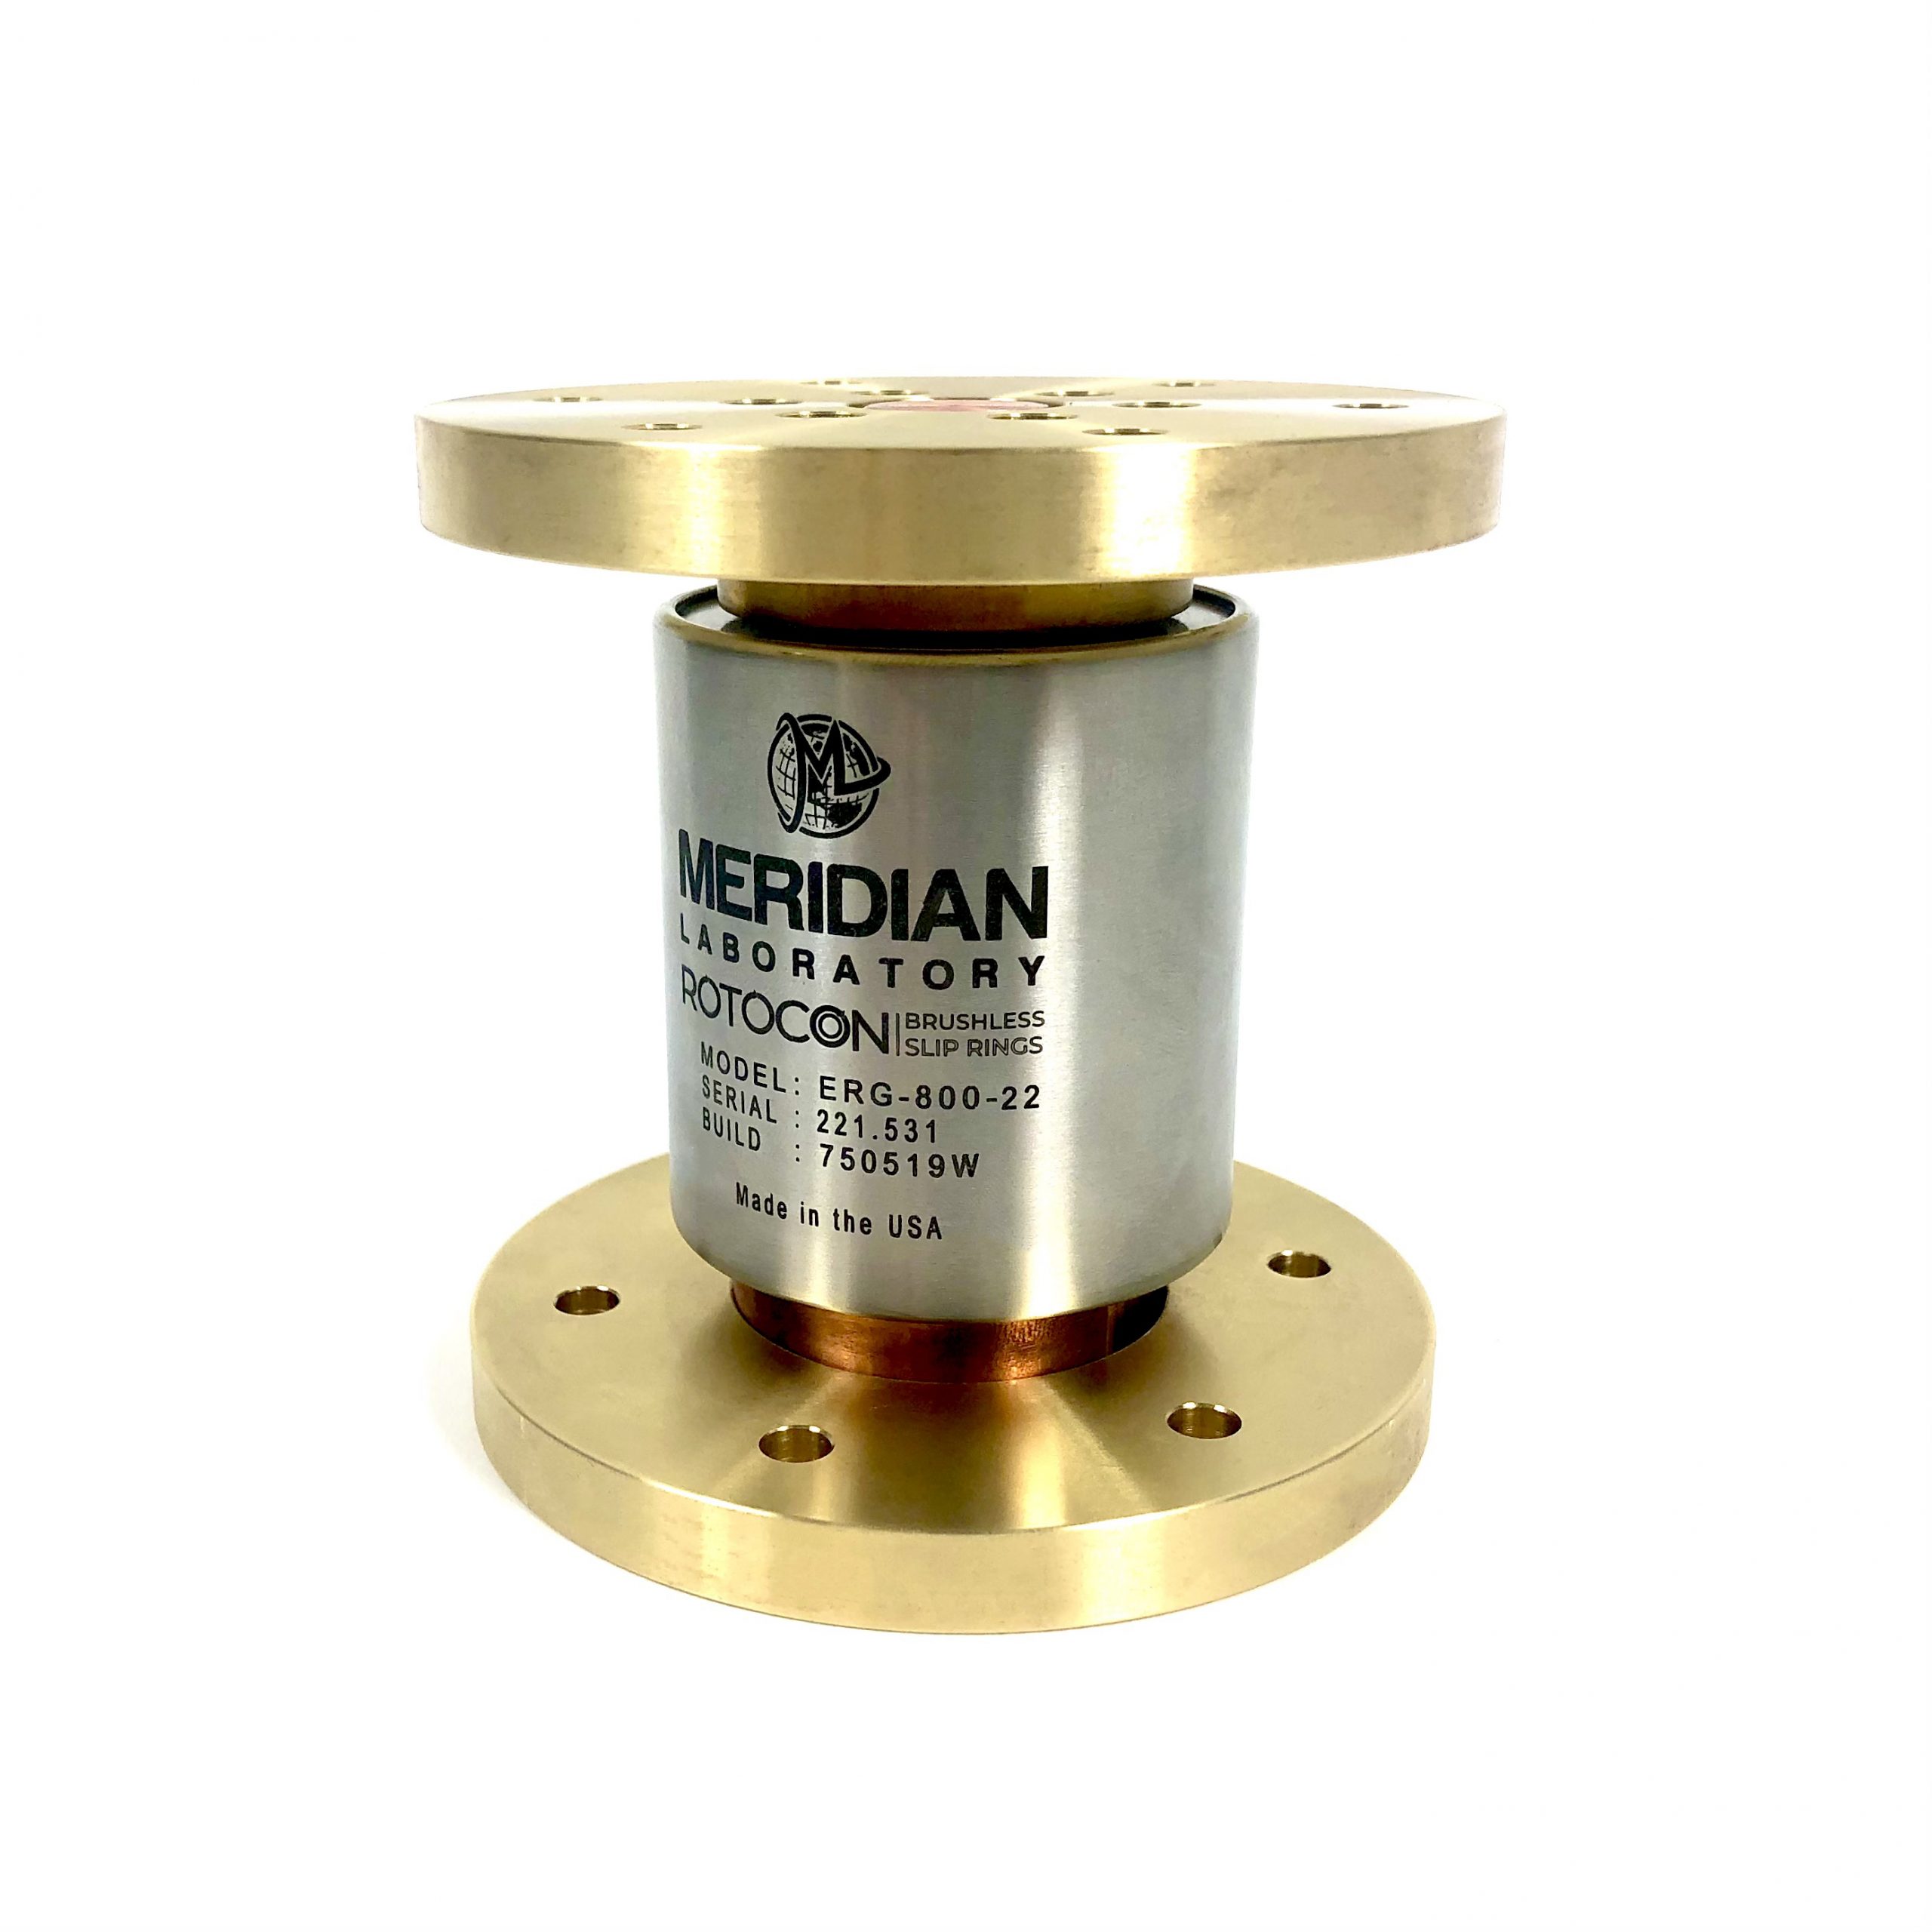 EndoRing® Metal Ruler Reduced Glare – Jordco